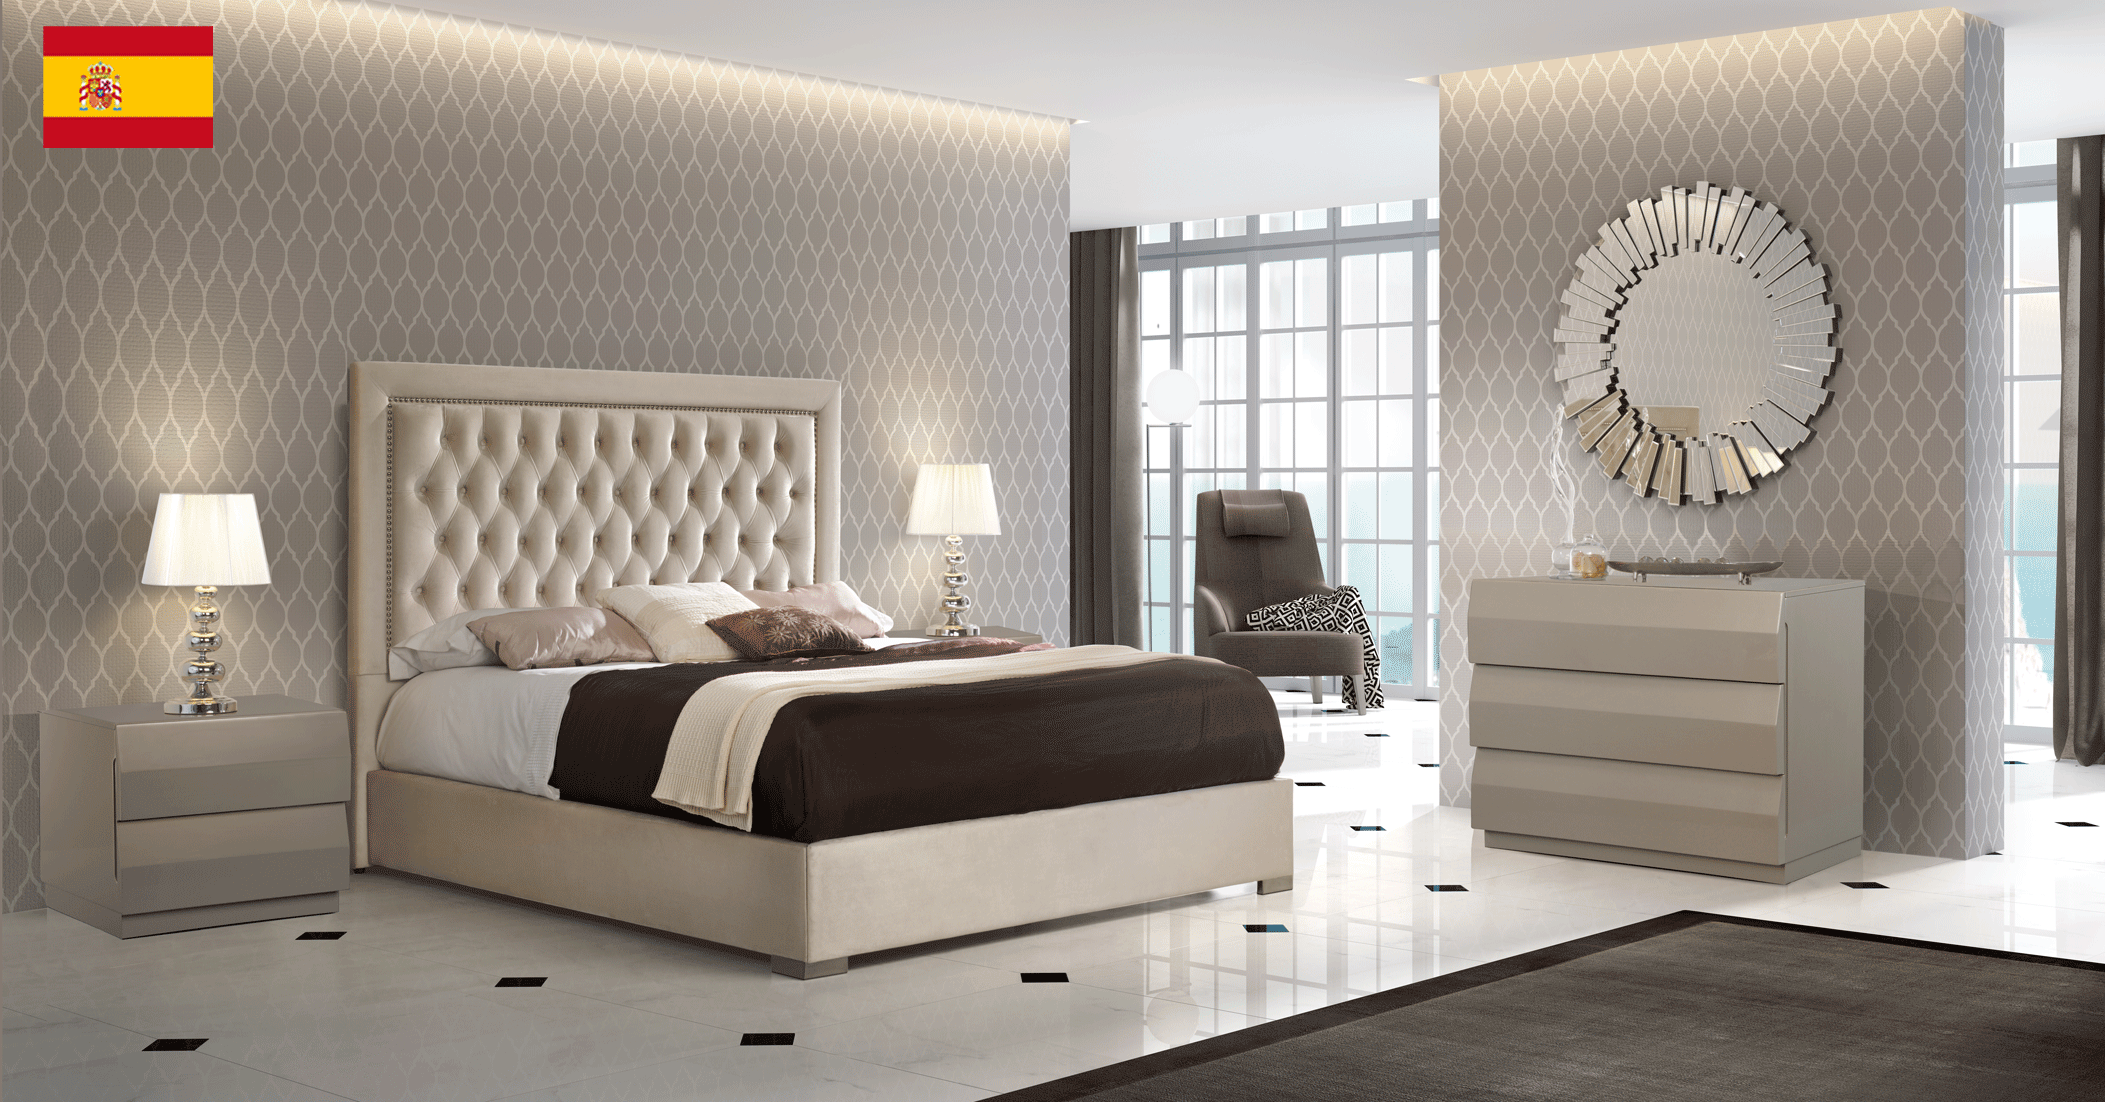 Bedroom Furniture Mattresses, Wooden Frames Adagio Bedroom w/Storage, M152, C152, E100